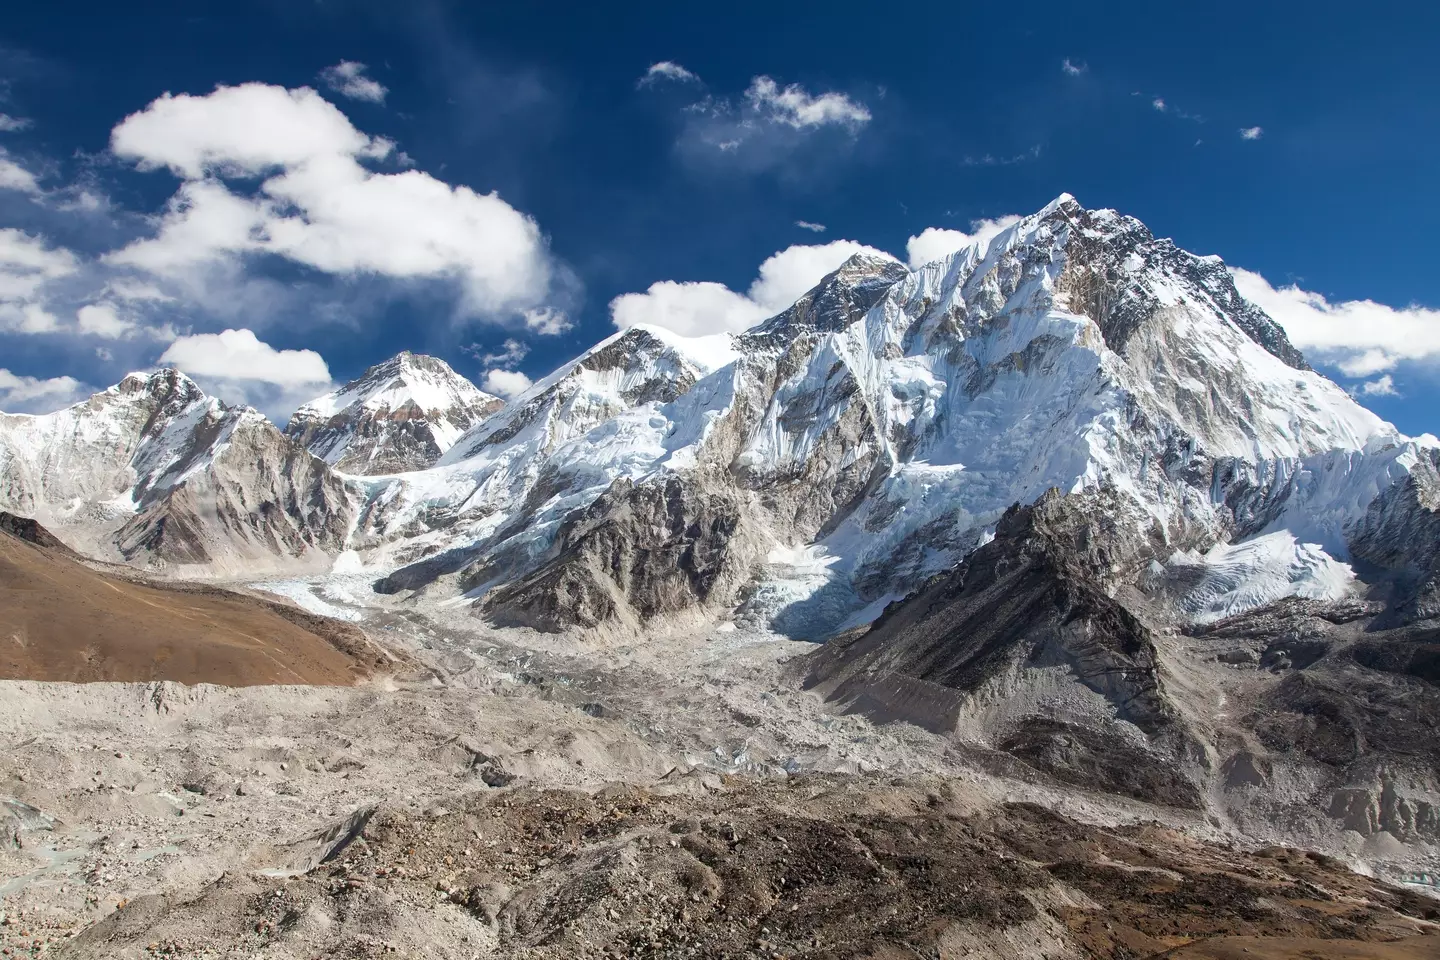 The glittering peak of Mount Everest.